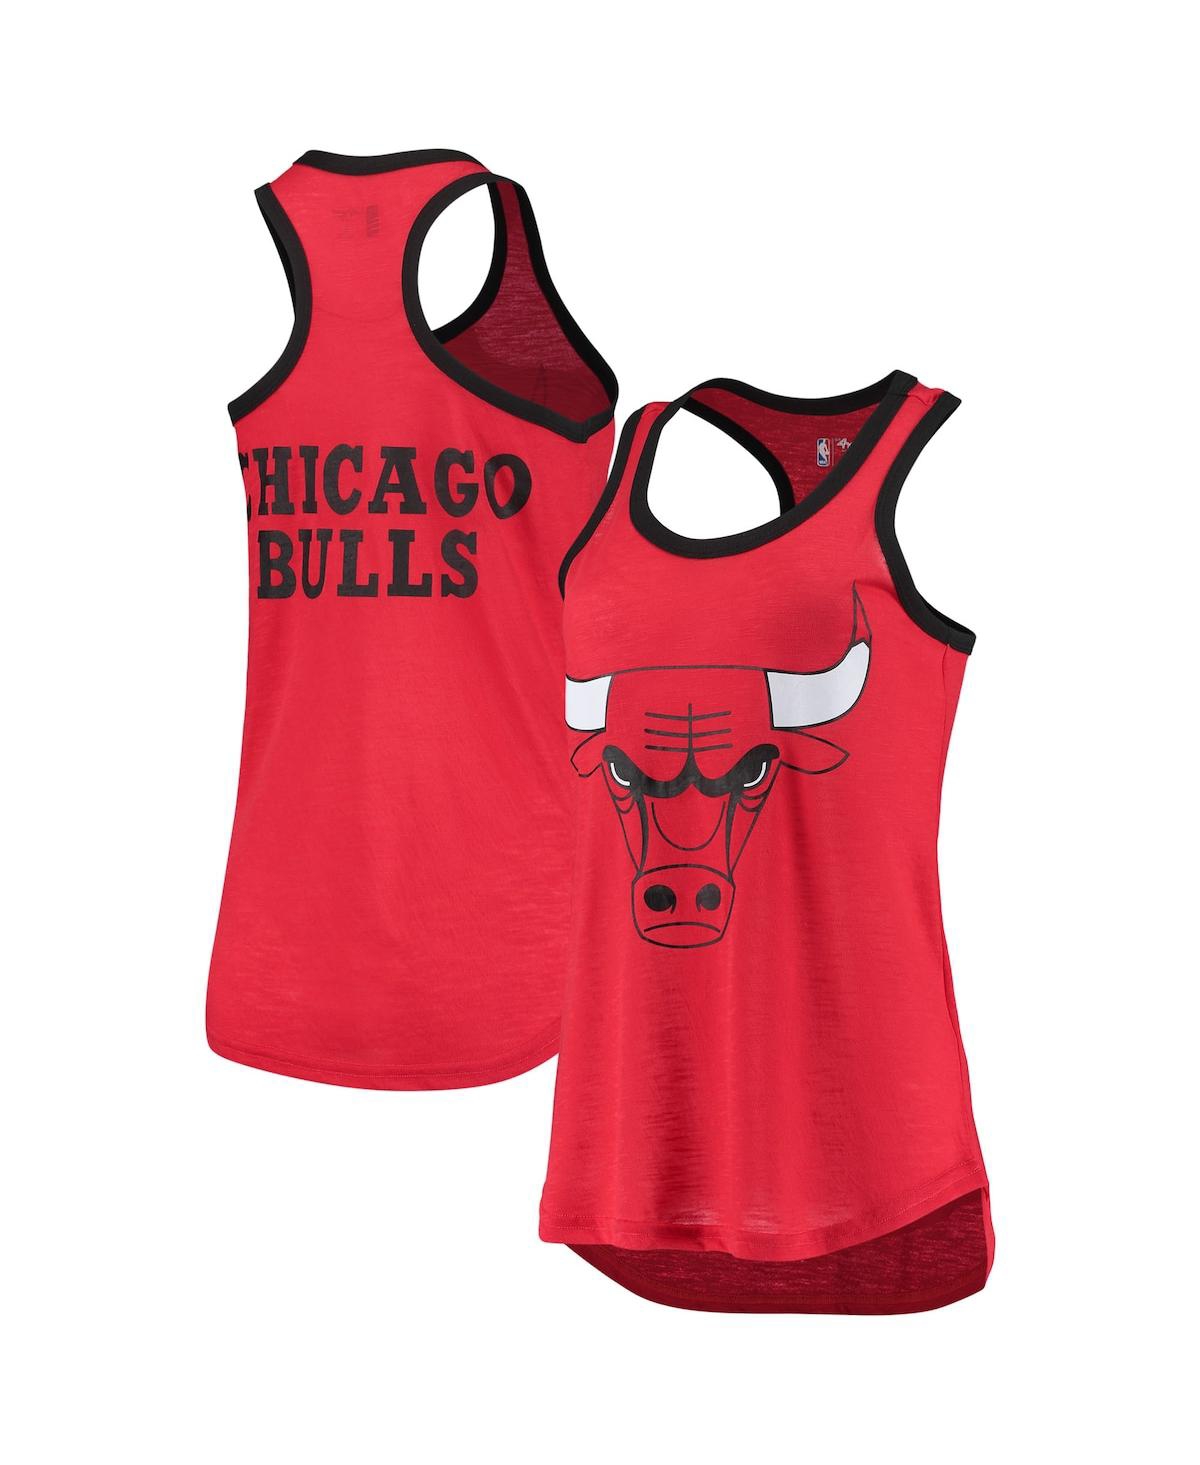 Women's Red Chicago Bulls Showdown Burnout Tank Top - Red